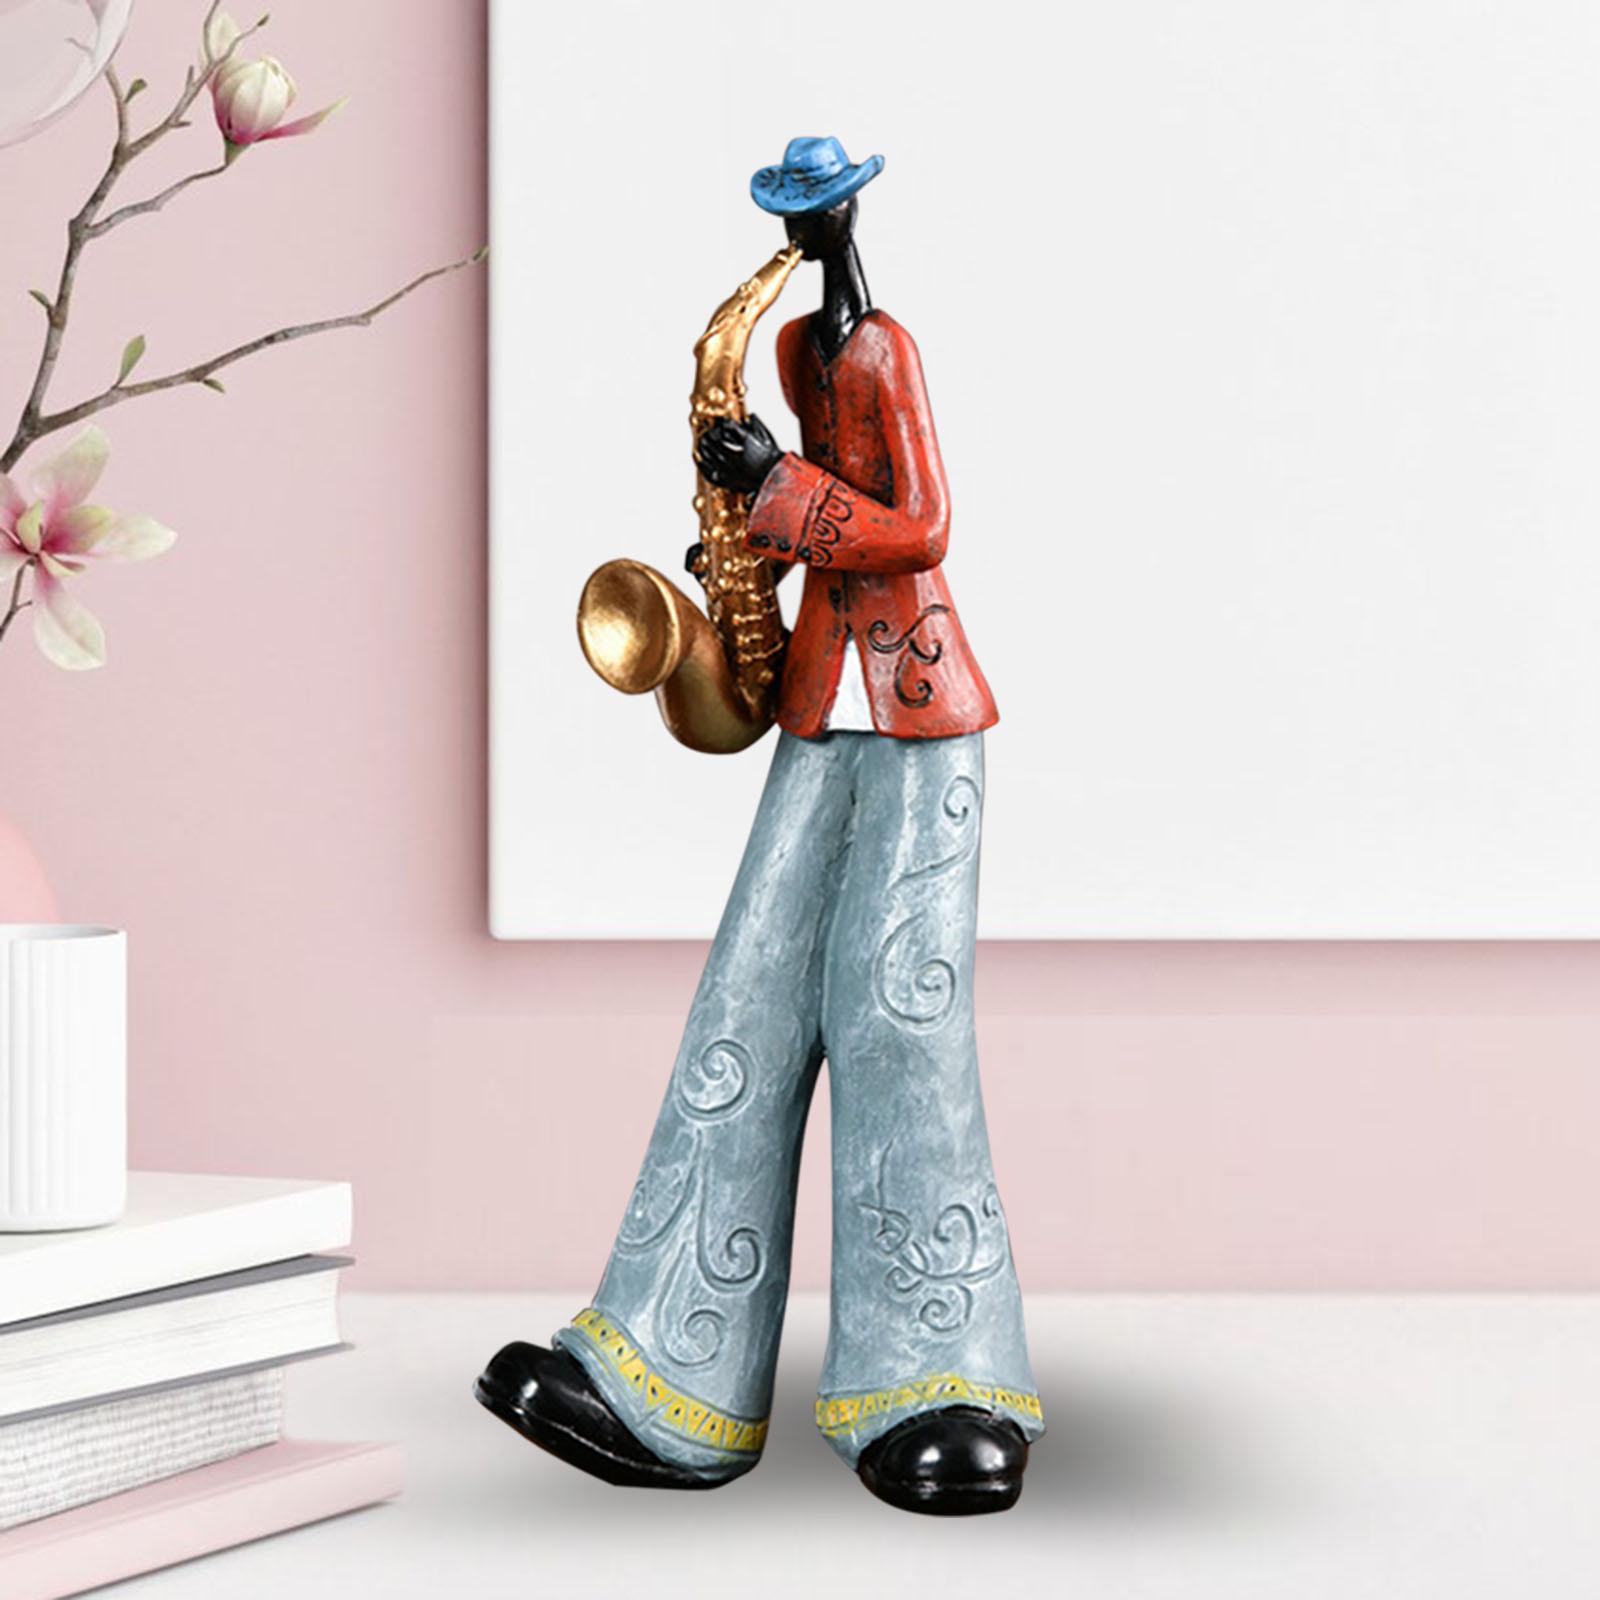 Rock Band Resin Statue Music Art Character Model Figurines 11x28cm Saxophone